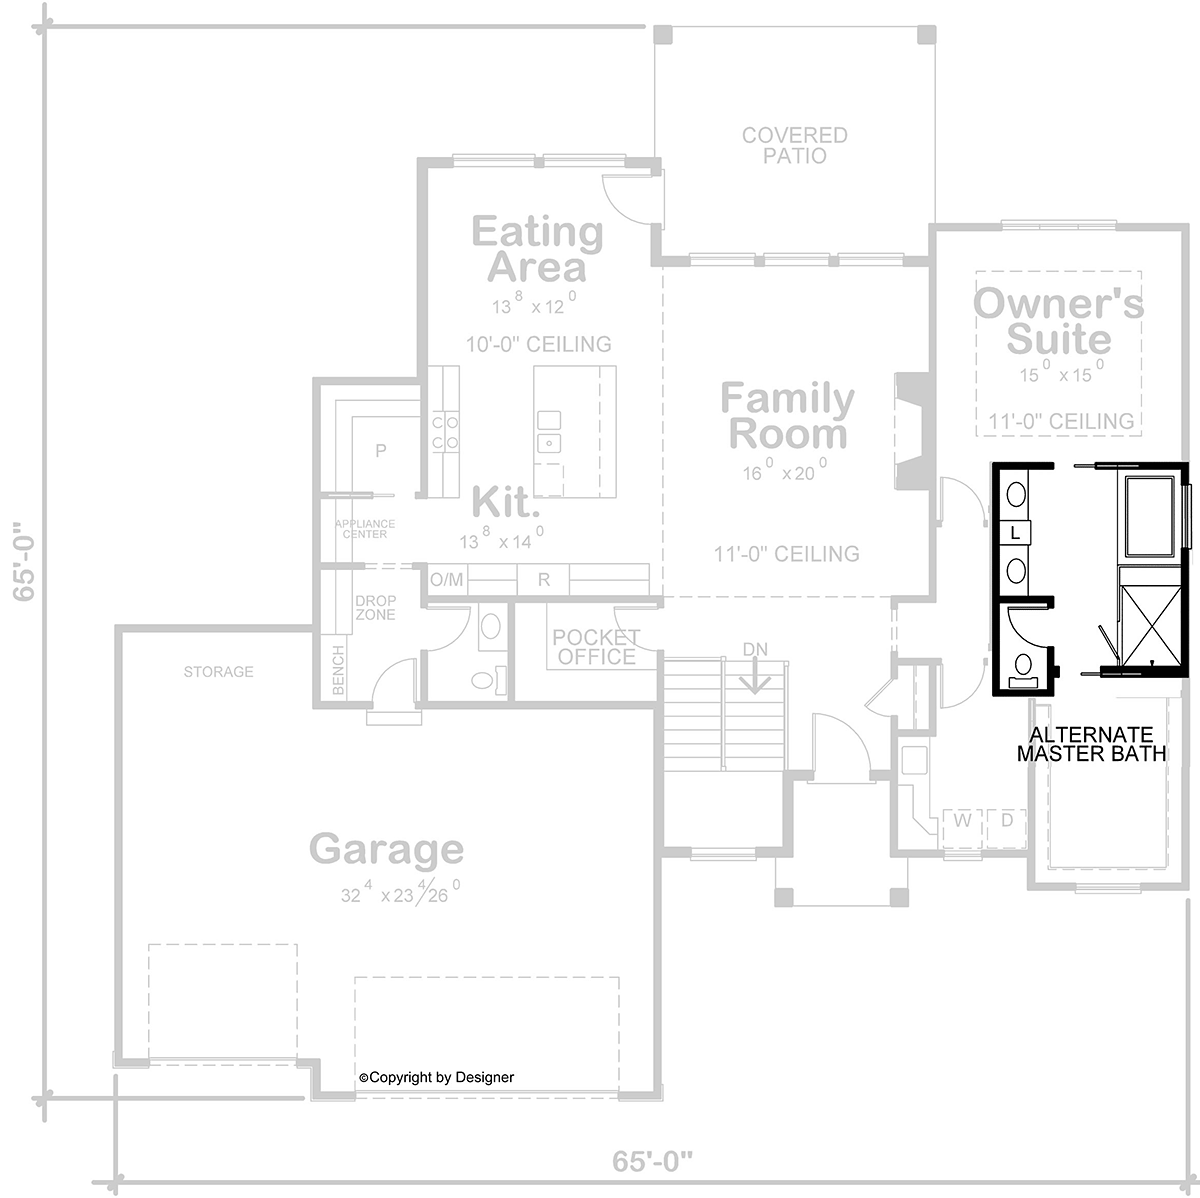 House Plan 81460 Alternate Level One